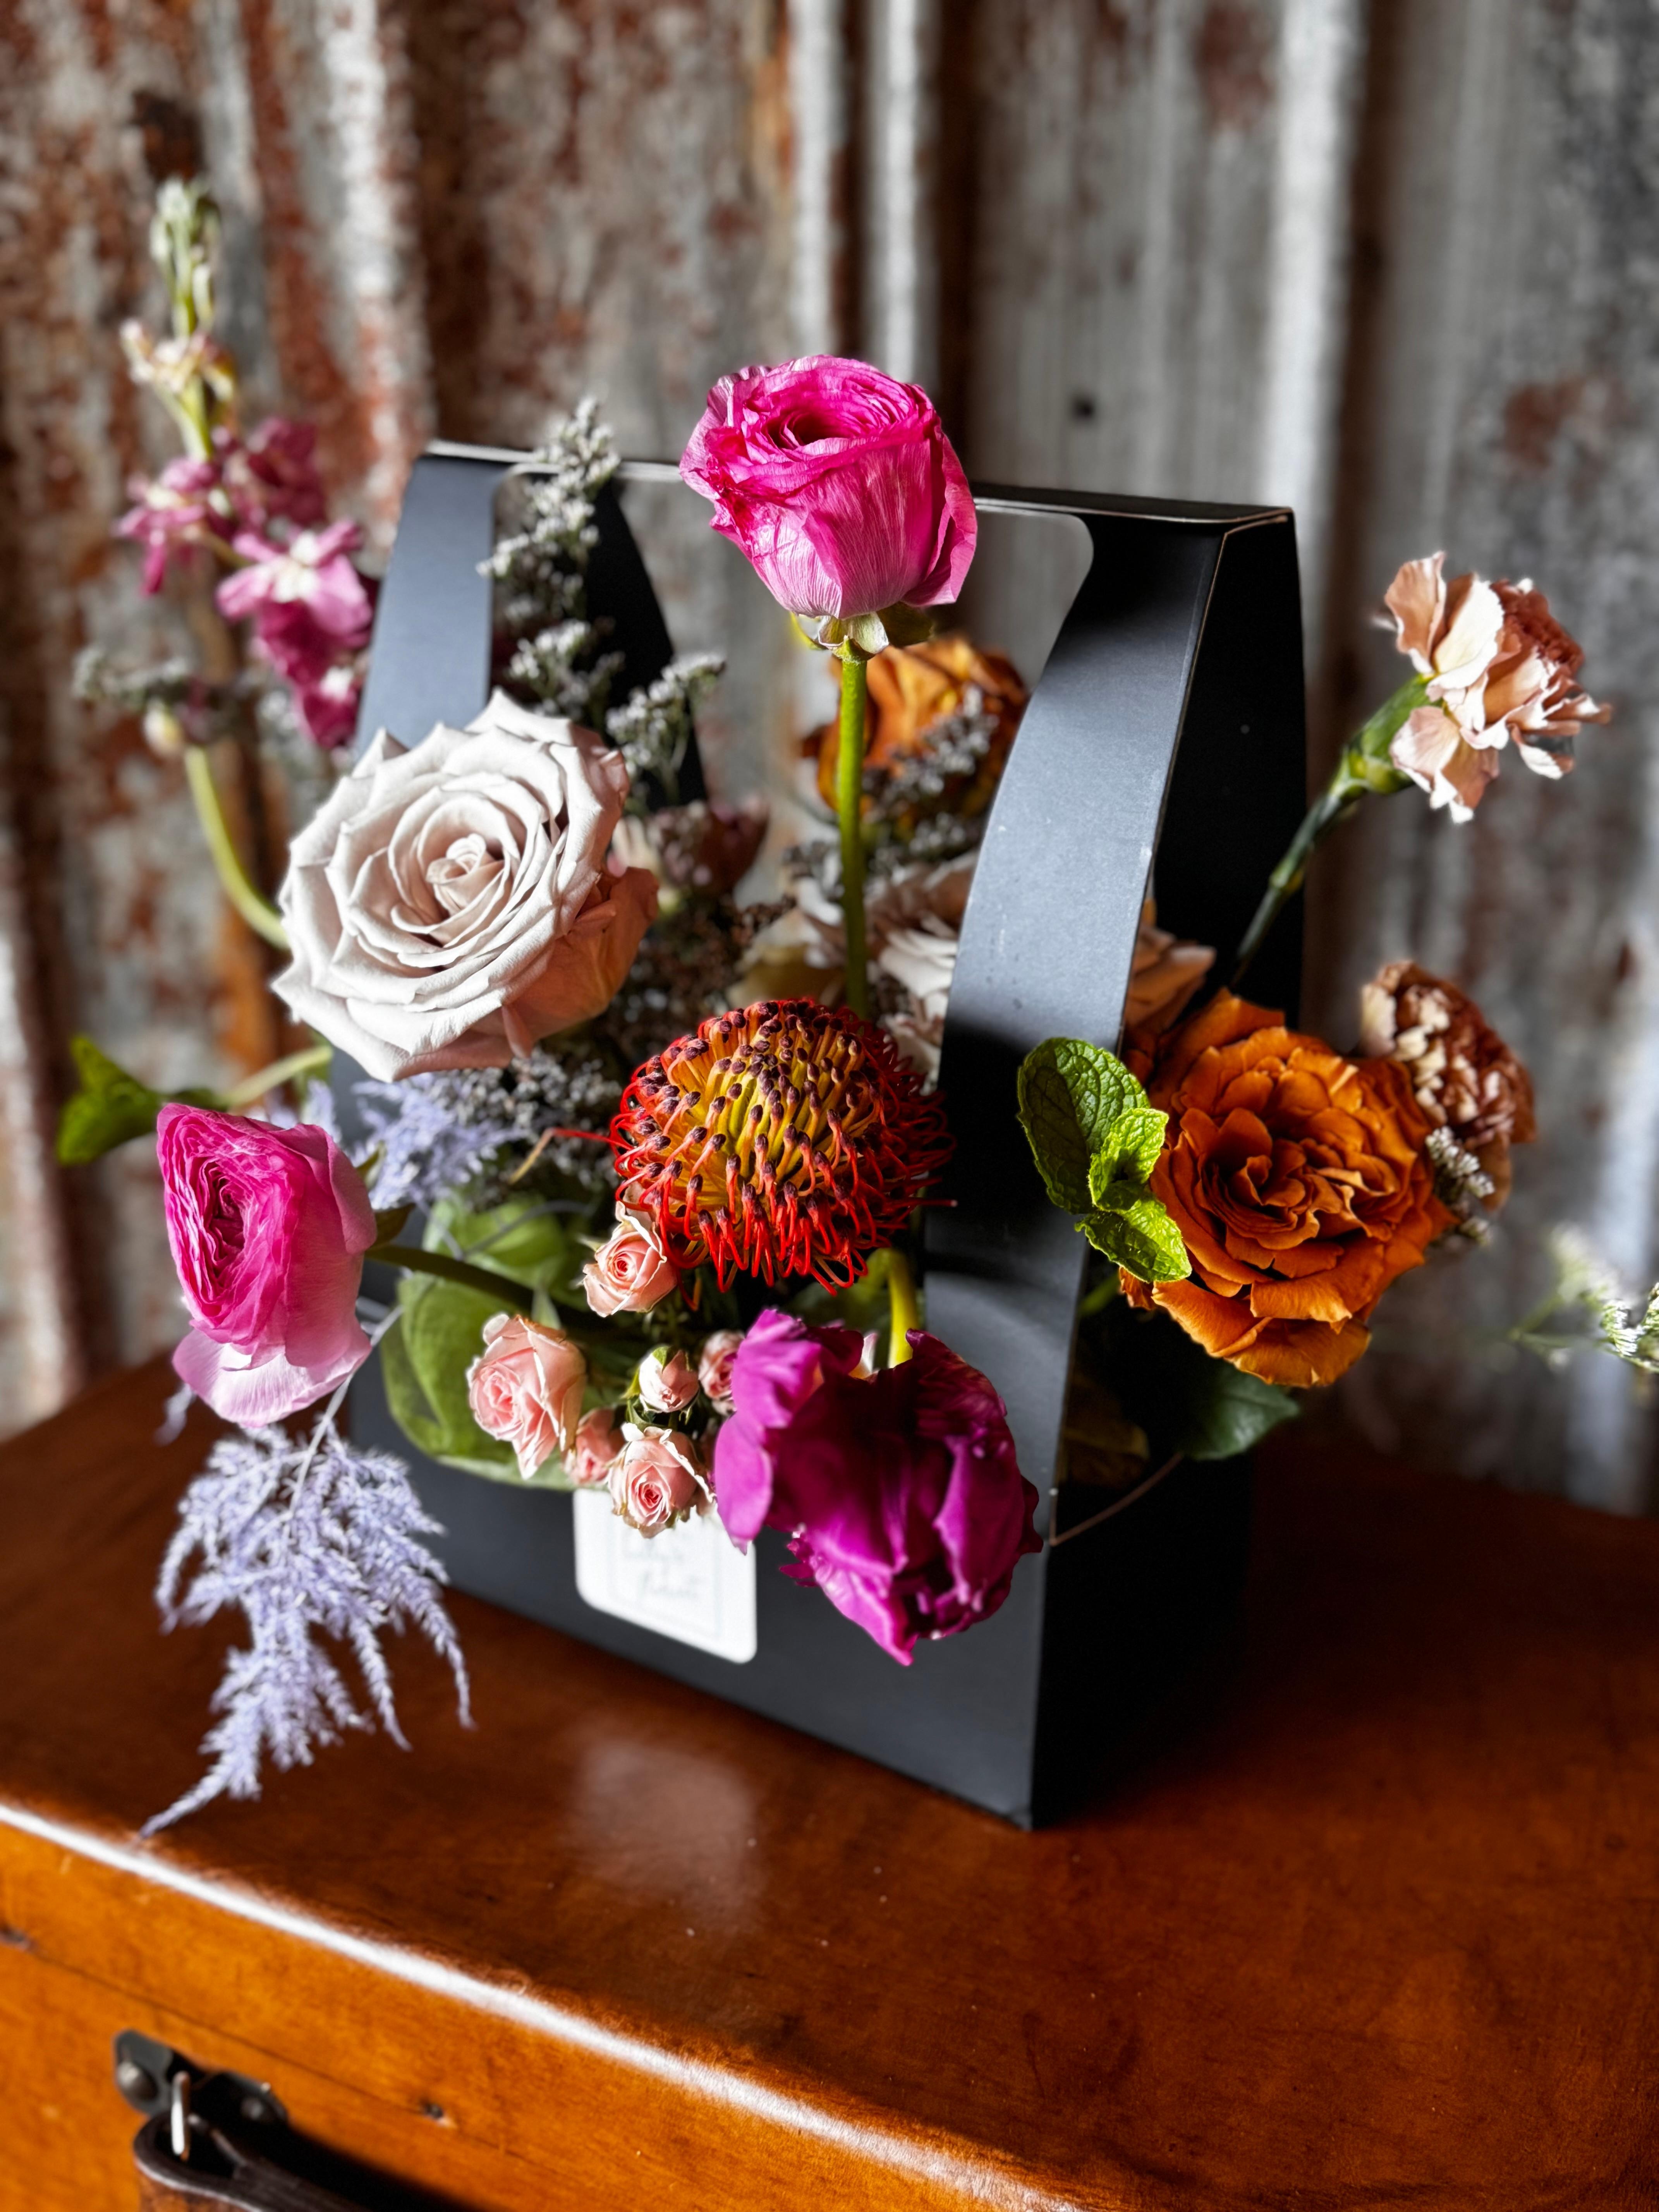 Floral Box